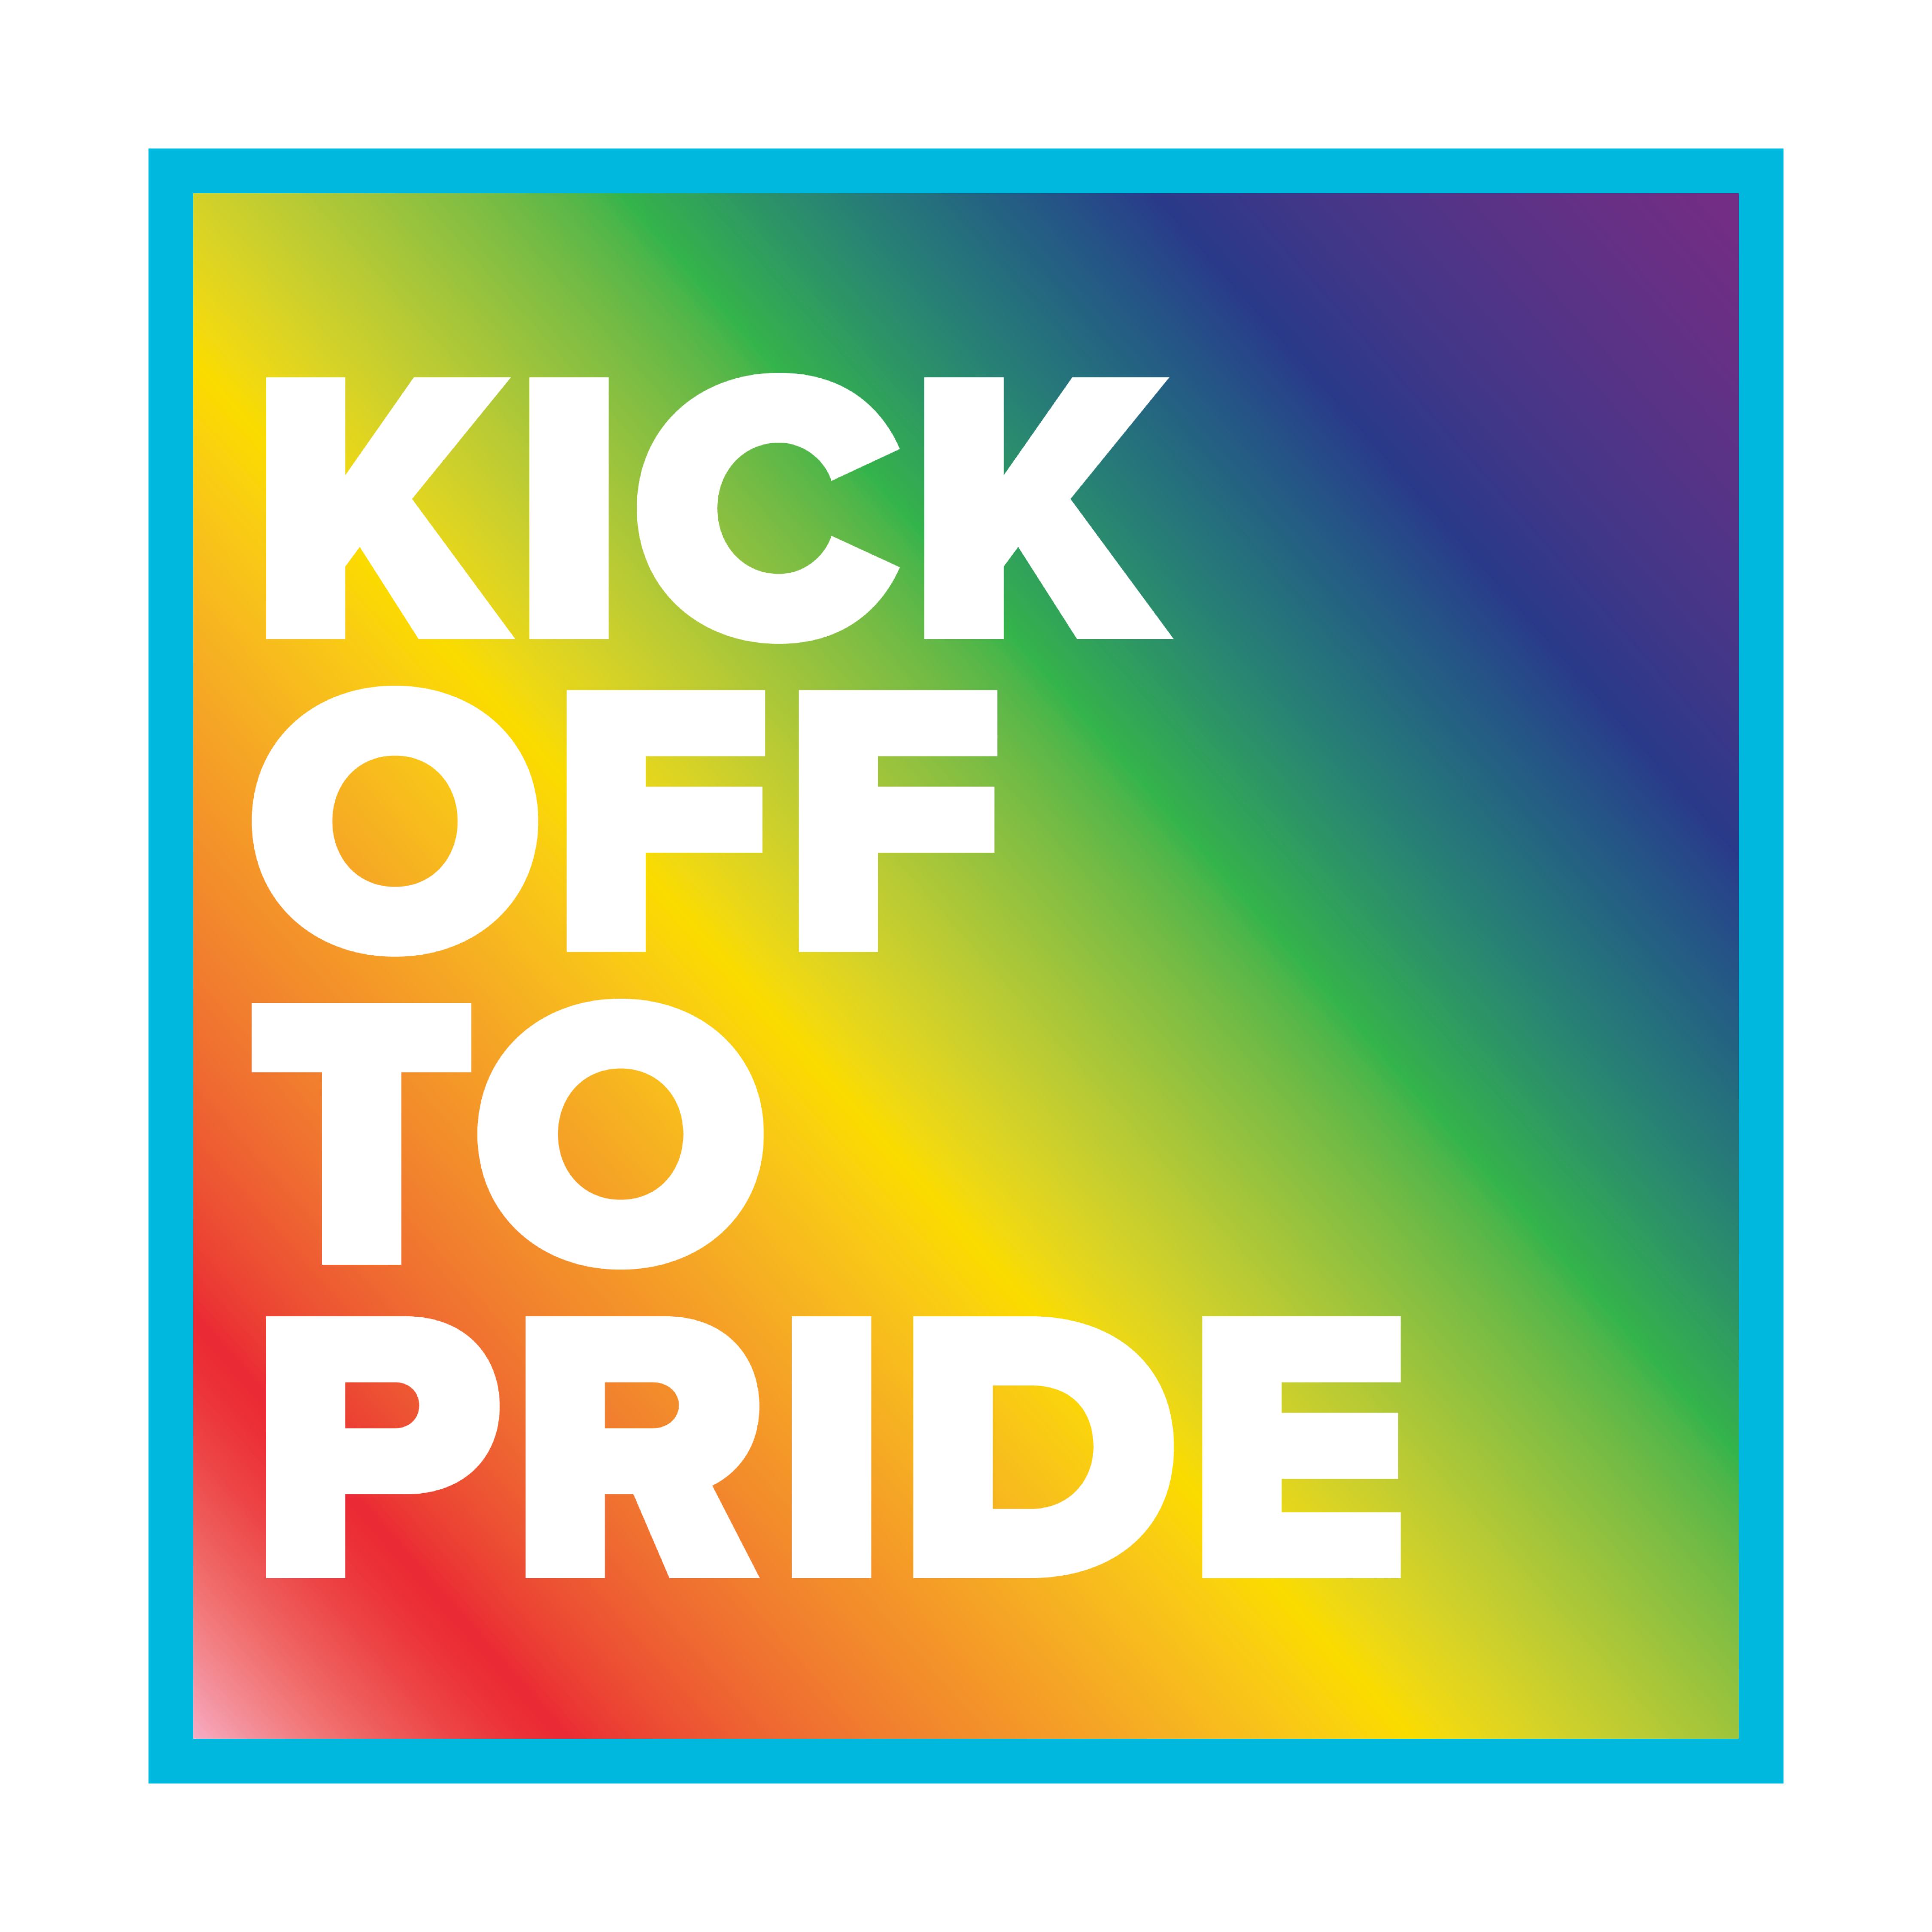 Kick off to Pride.